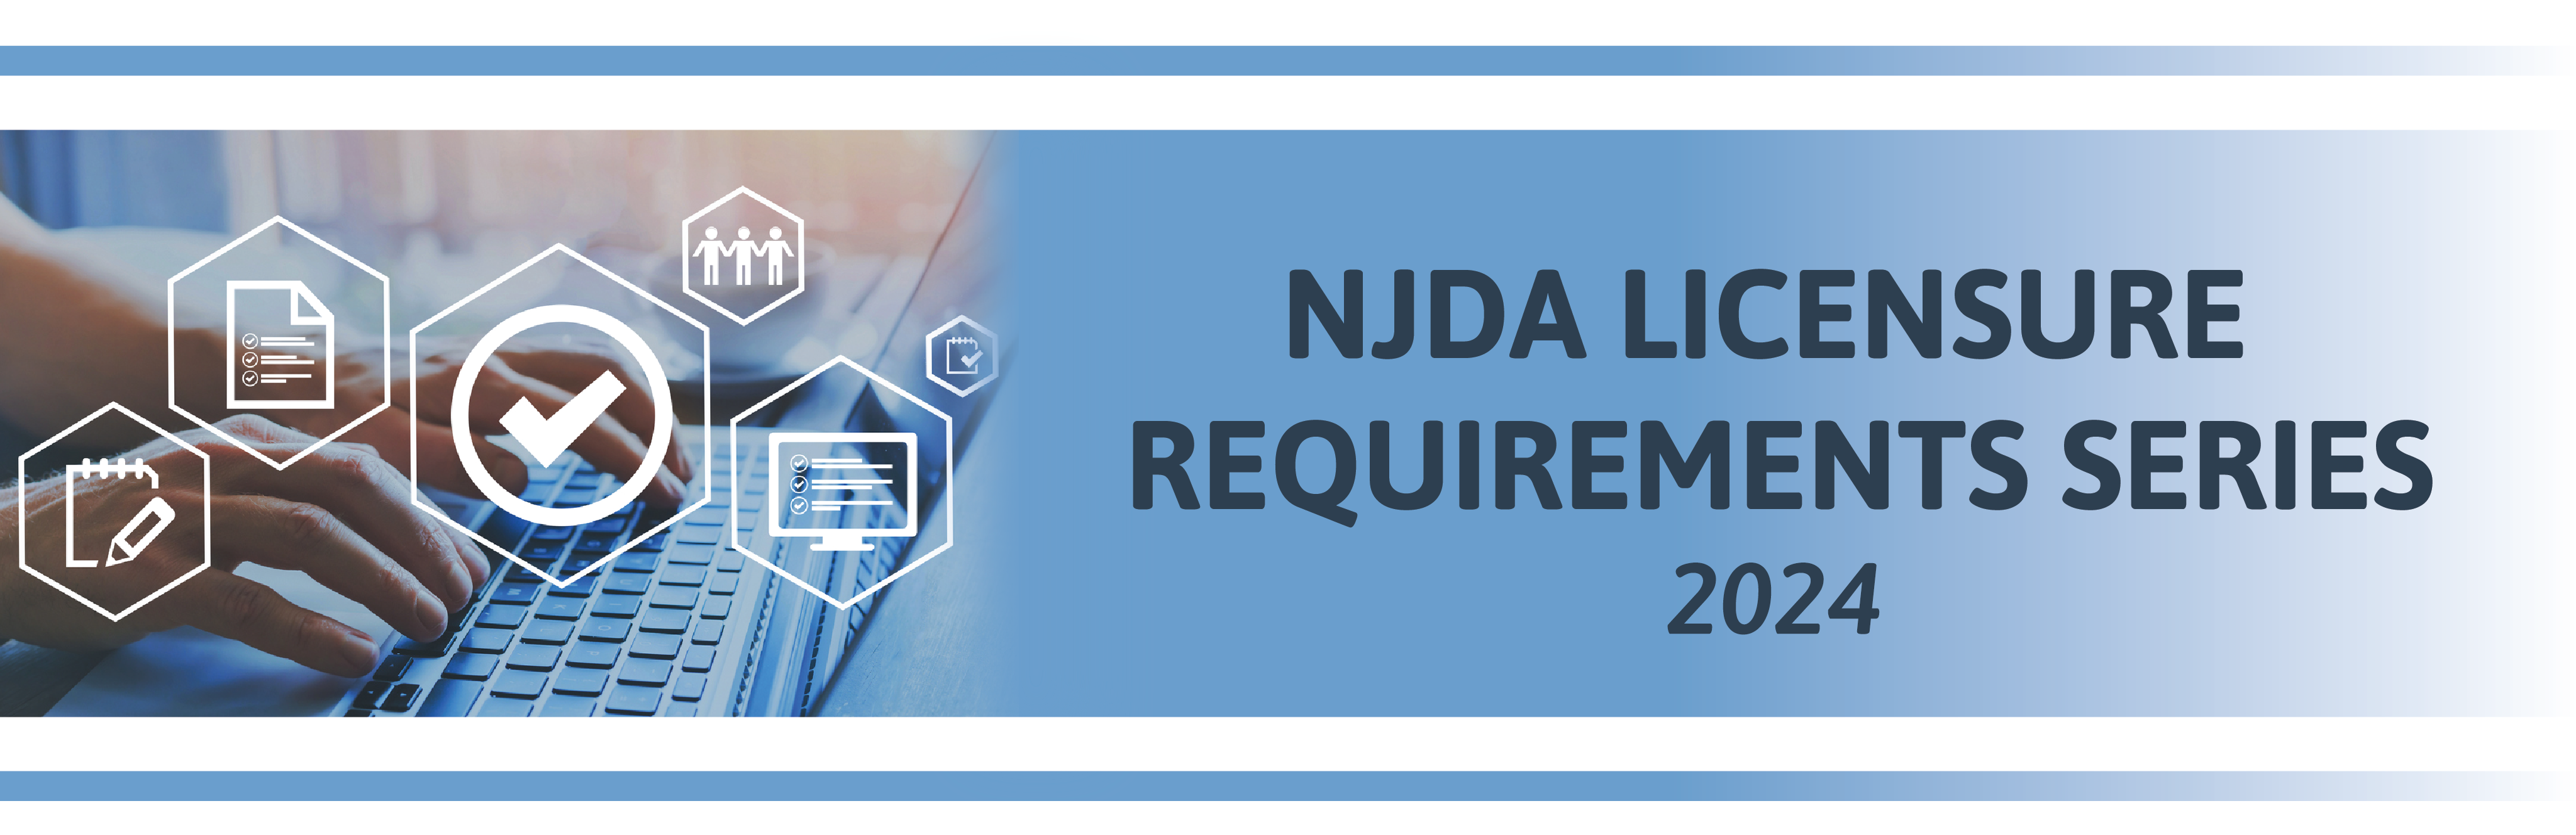 NJDA Licensure Requirements Series 2024